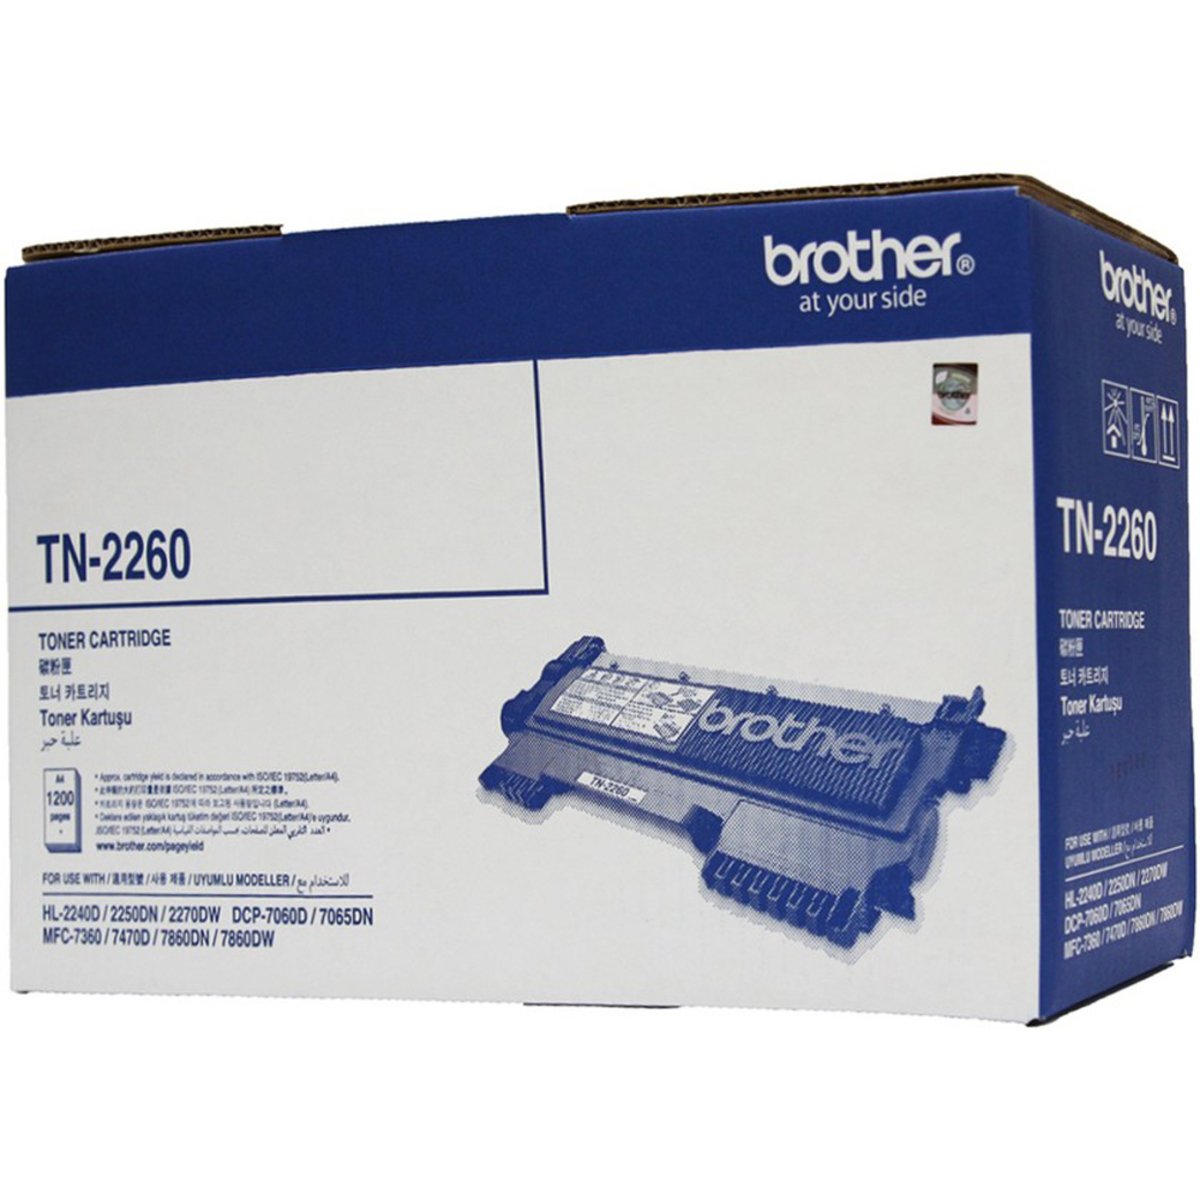 Brother Toner Cartridge TN-2260  Black